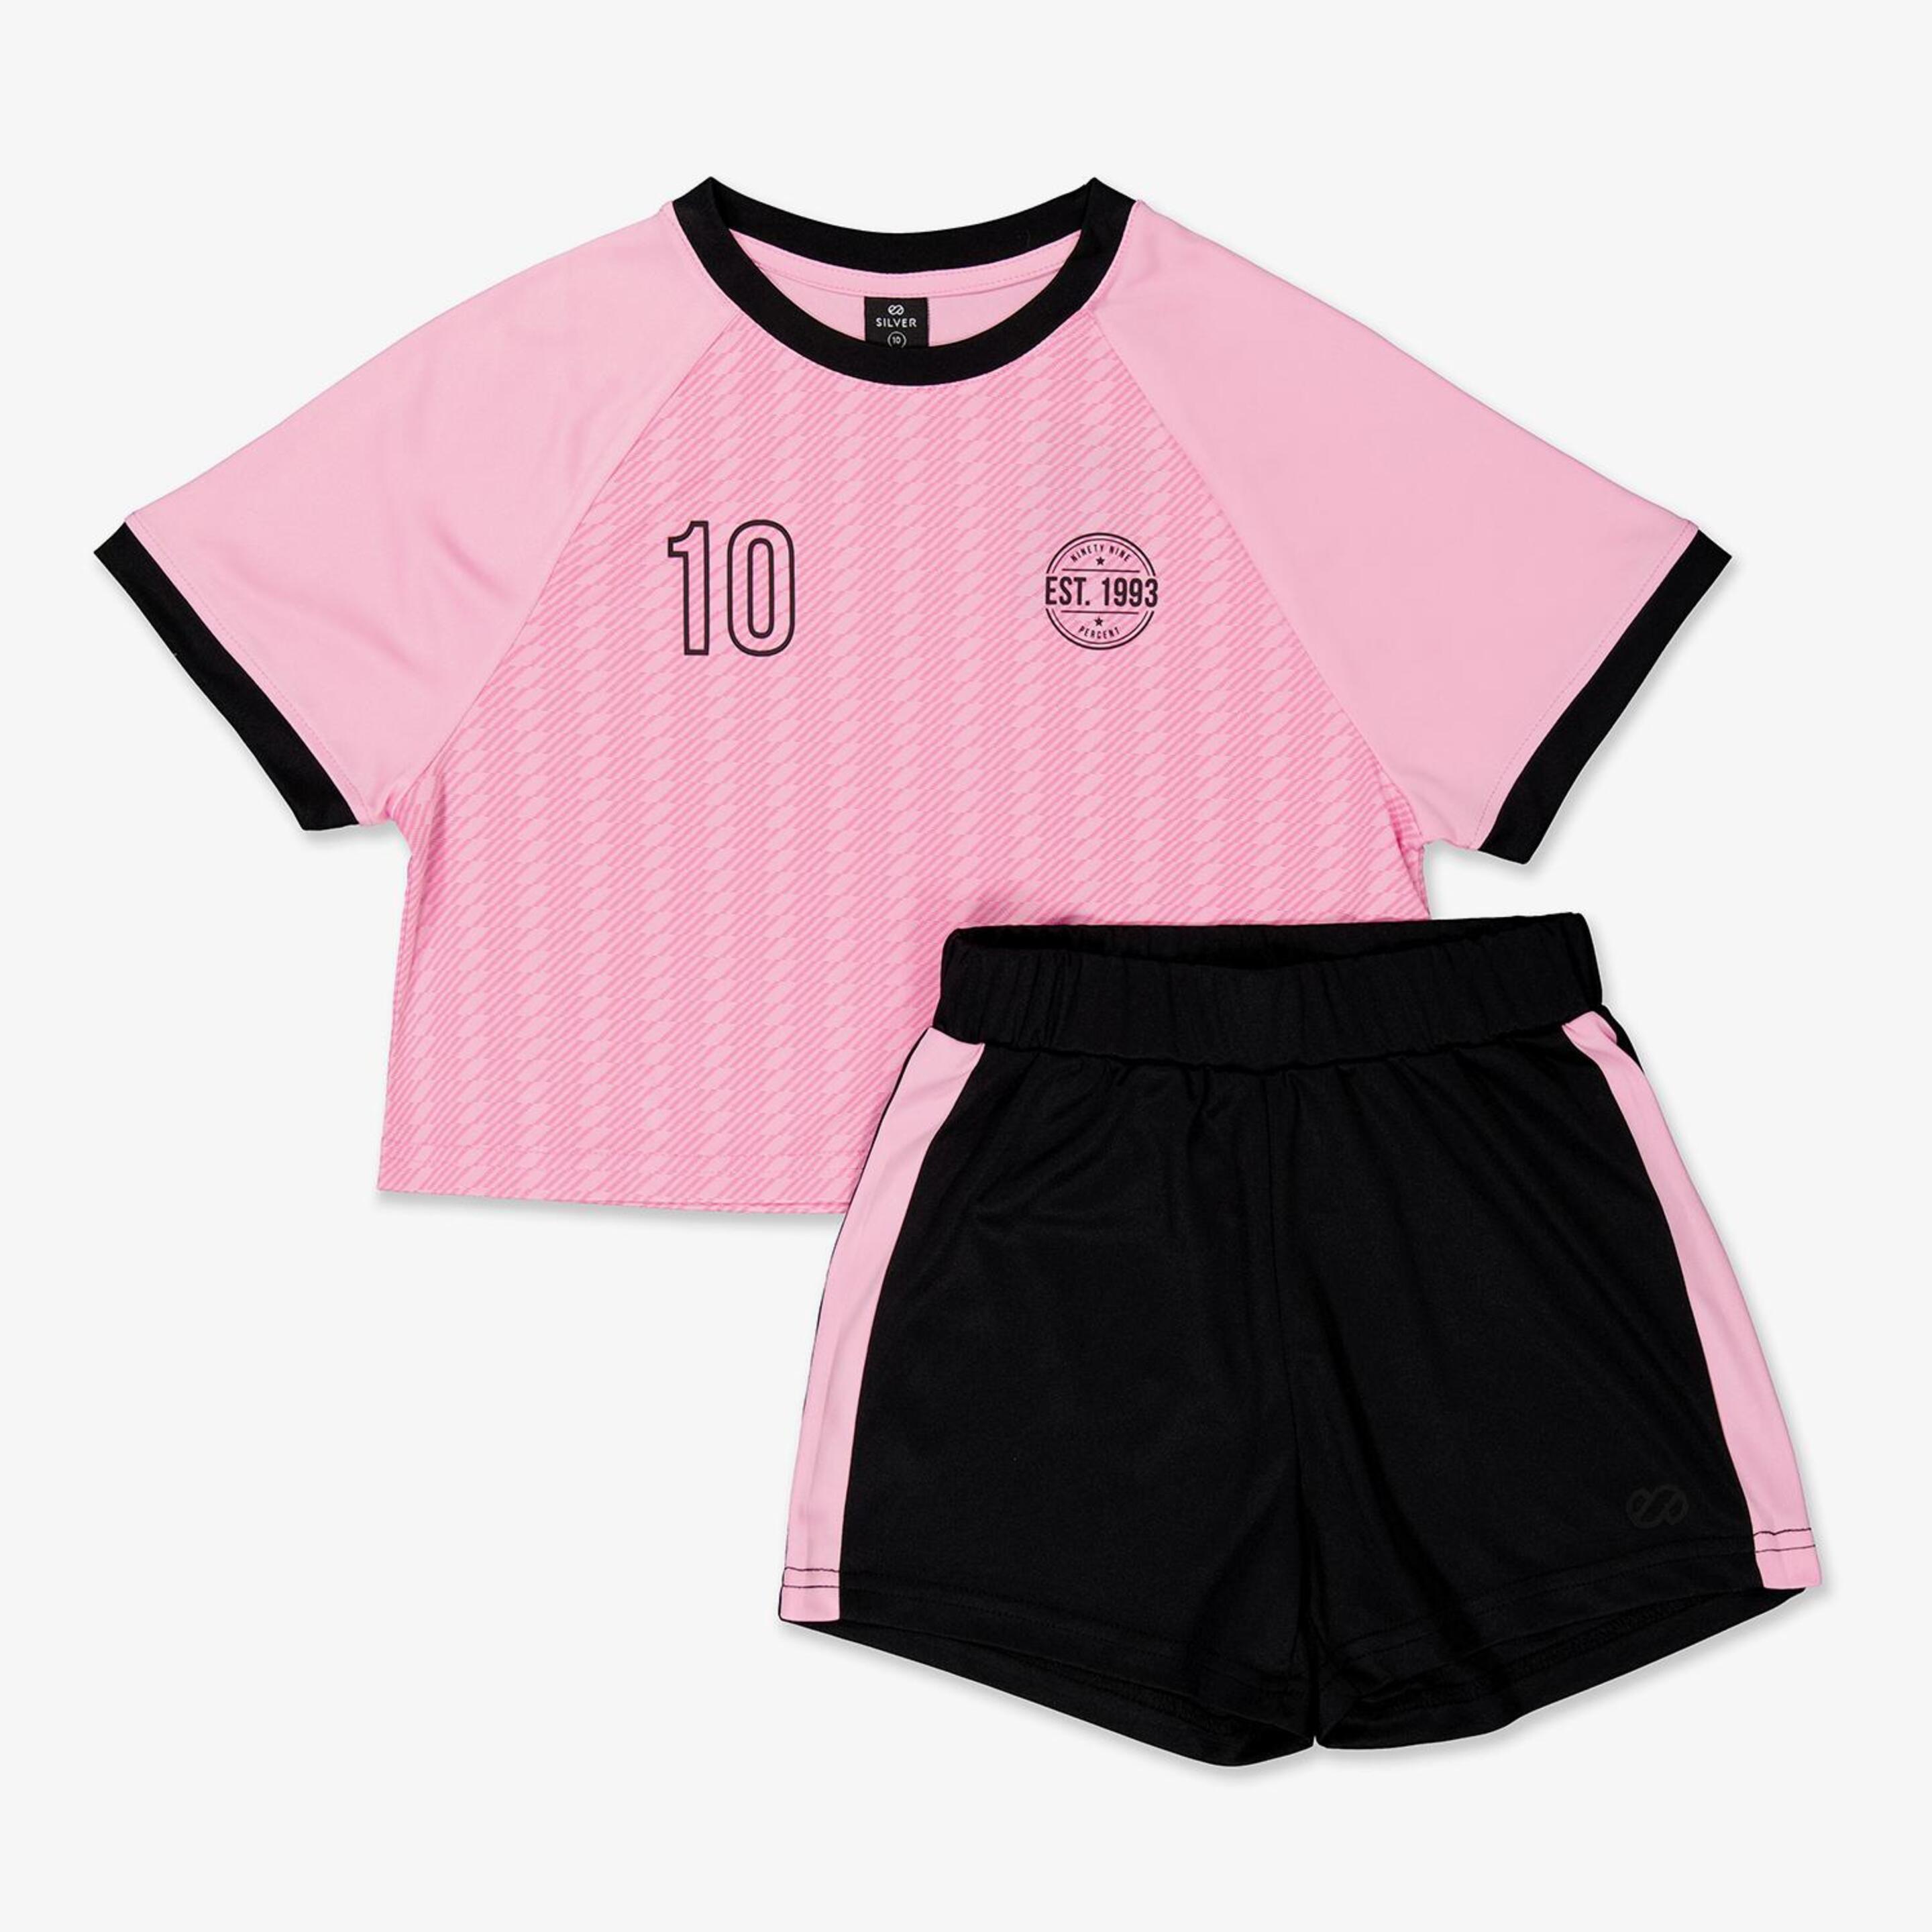 Silver Futbolera - rosa - Conjunto Rapariga